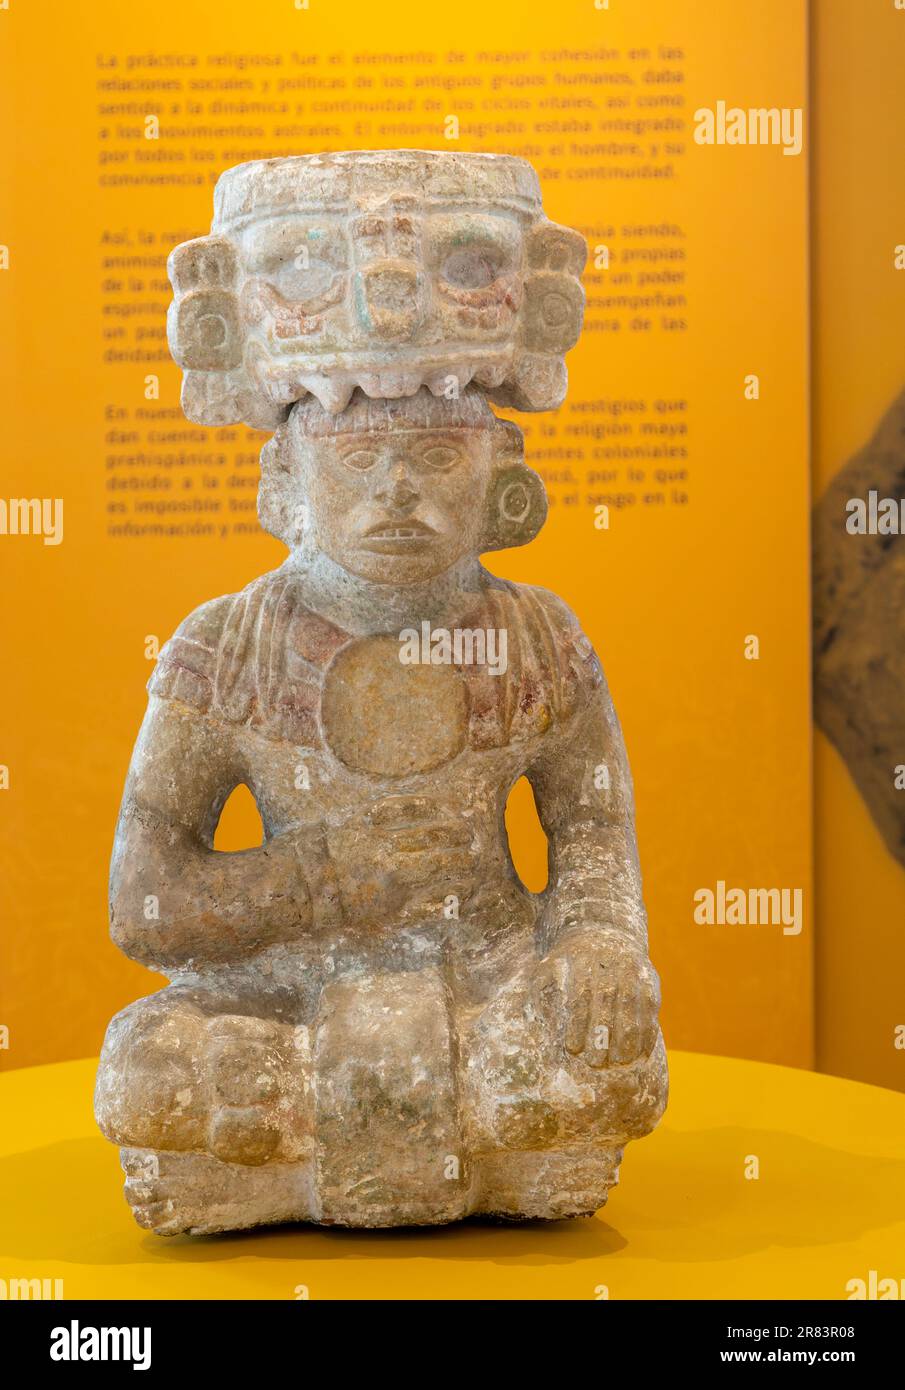 'Idolos' exhibition anthropomorphic figure, Palacio Canton palace anthropology museum, Merida, Yucatan State, Mexico Stock Photo